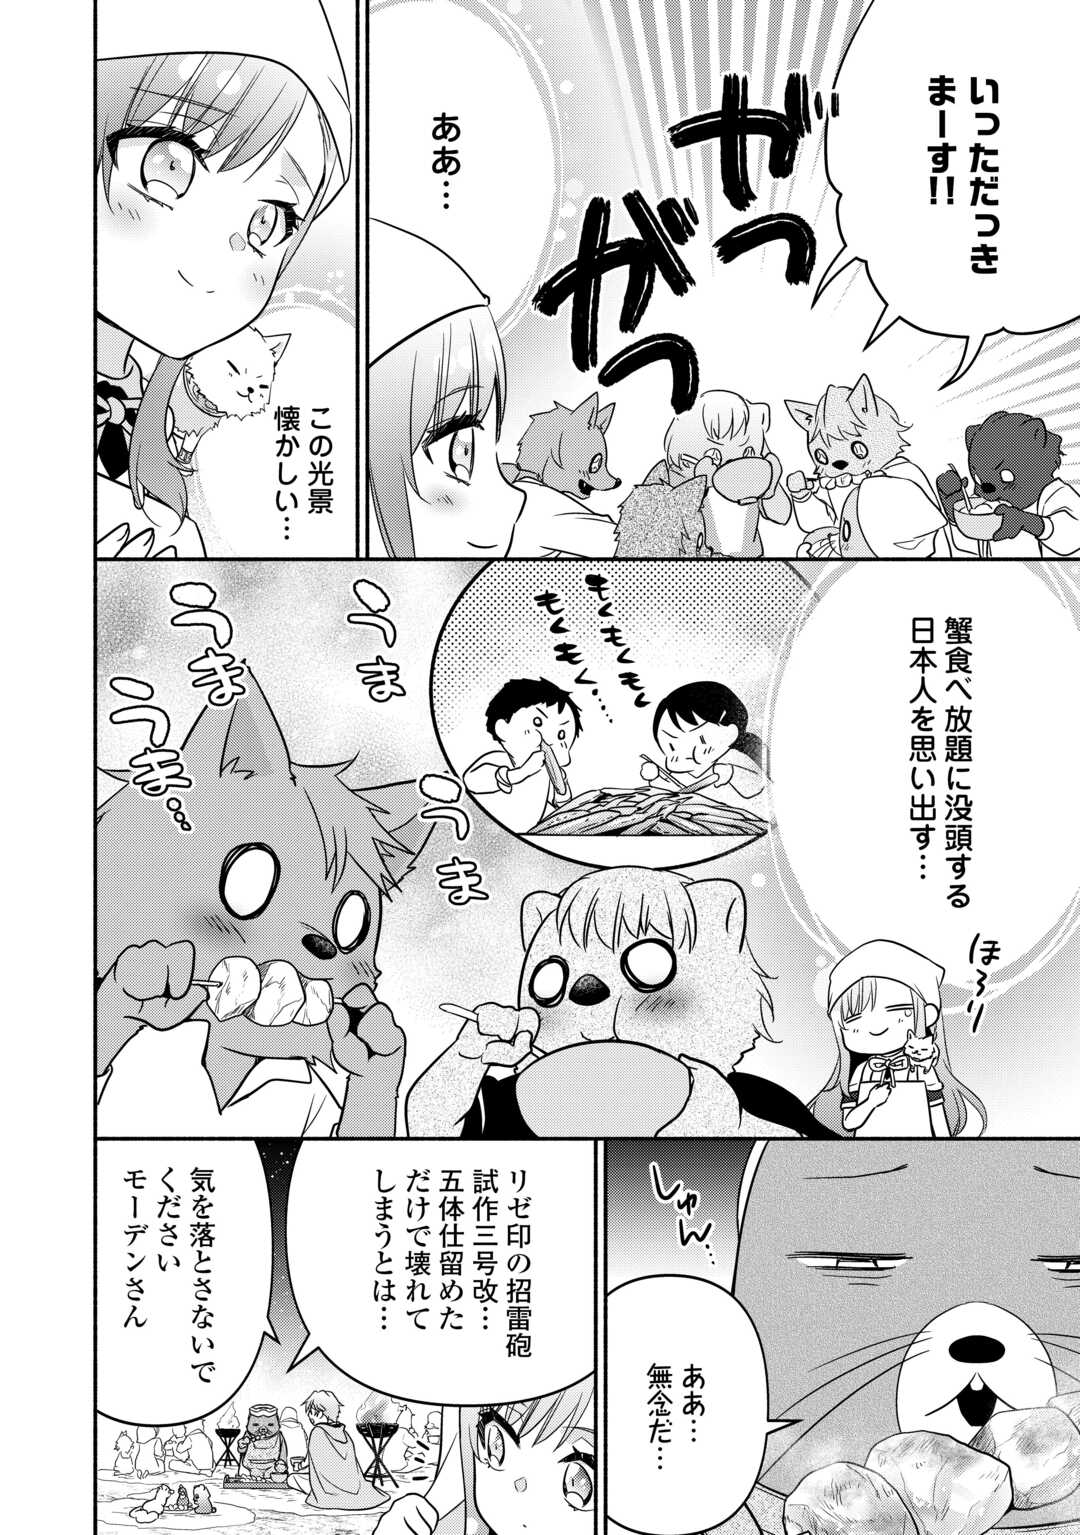 Tensei Youjo. Kamikemono to Ouji to, Saikyou no Ojisan Youhei-dan no Naka de Ikiru. - Chapter 19 - Page 2